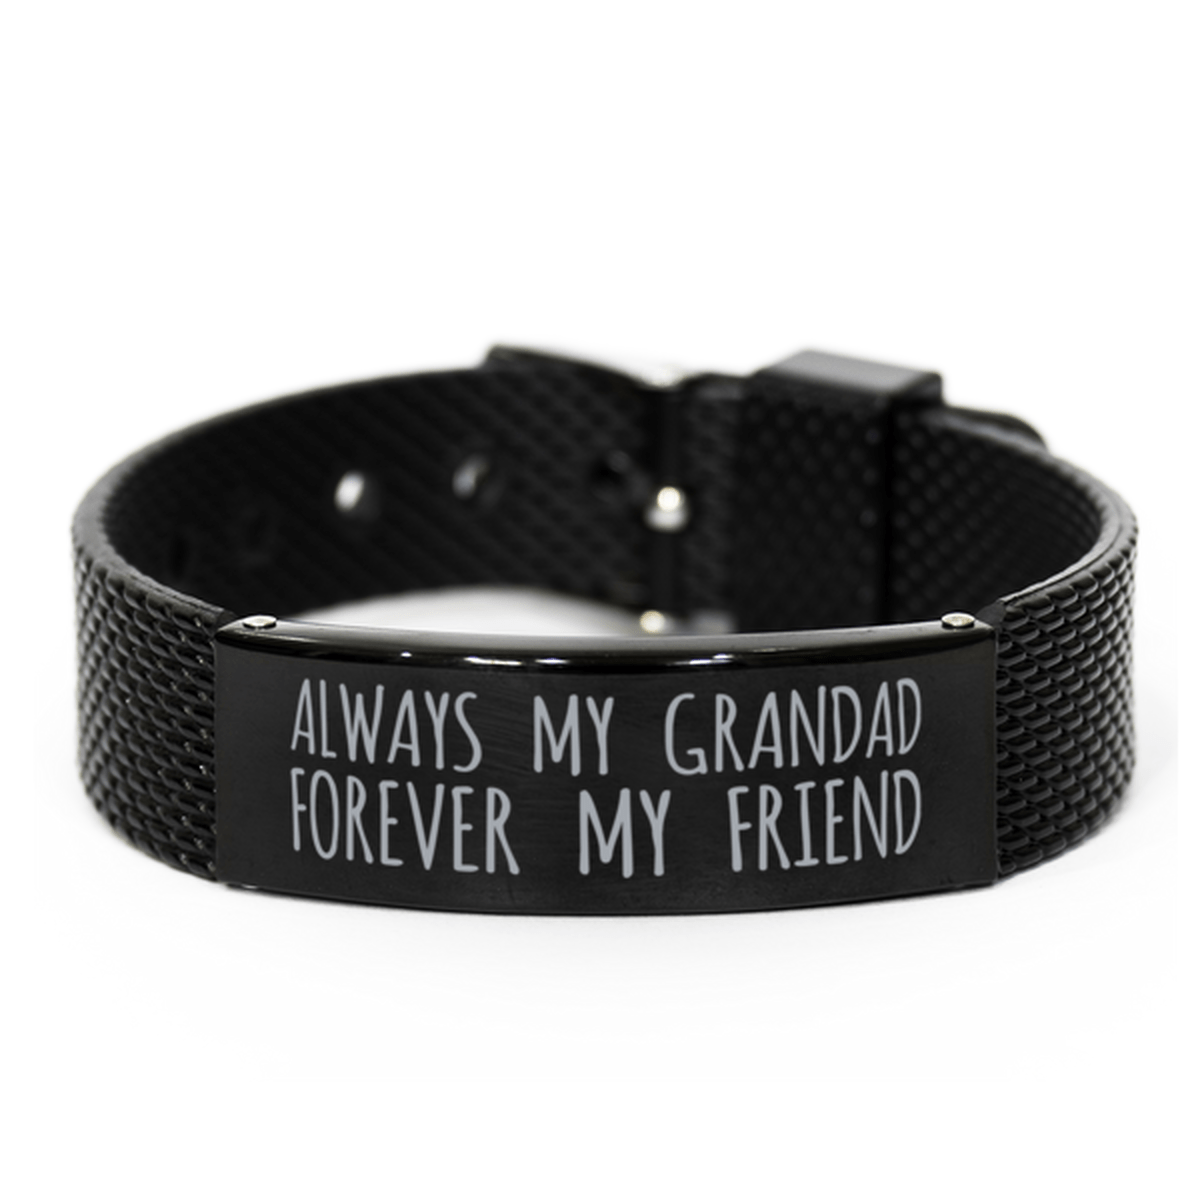 Inspirational Grandad Black Shark Mesh Bracelet, Always My Grandad Forever My Friend, Best Birthday Gifts for Family Friends